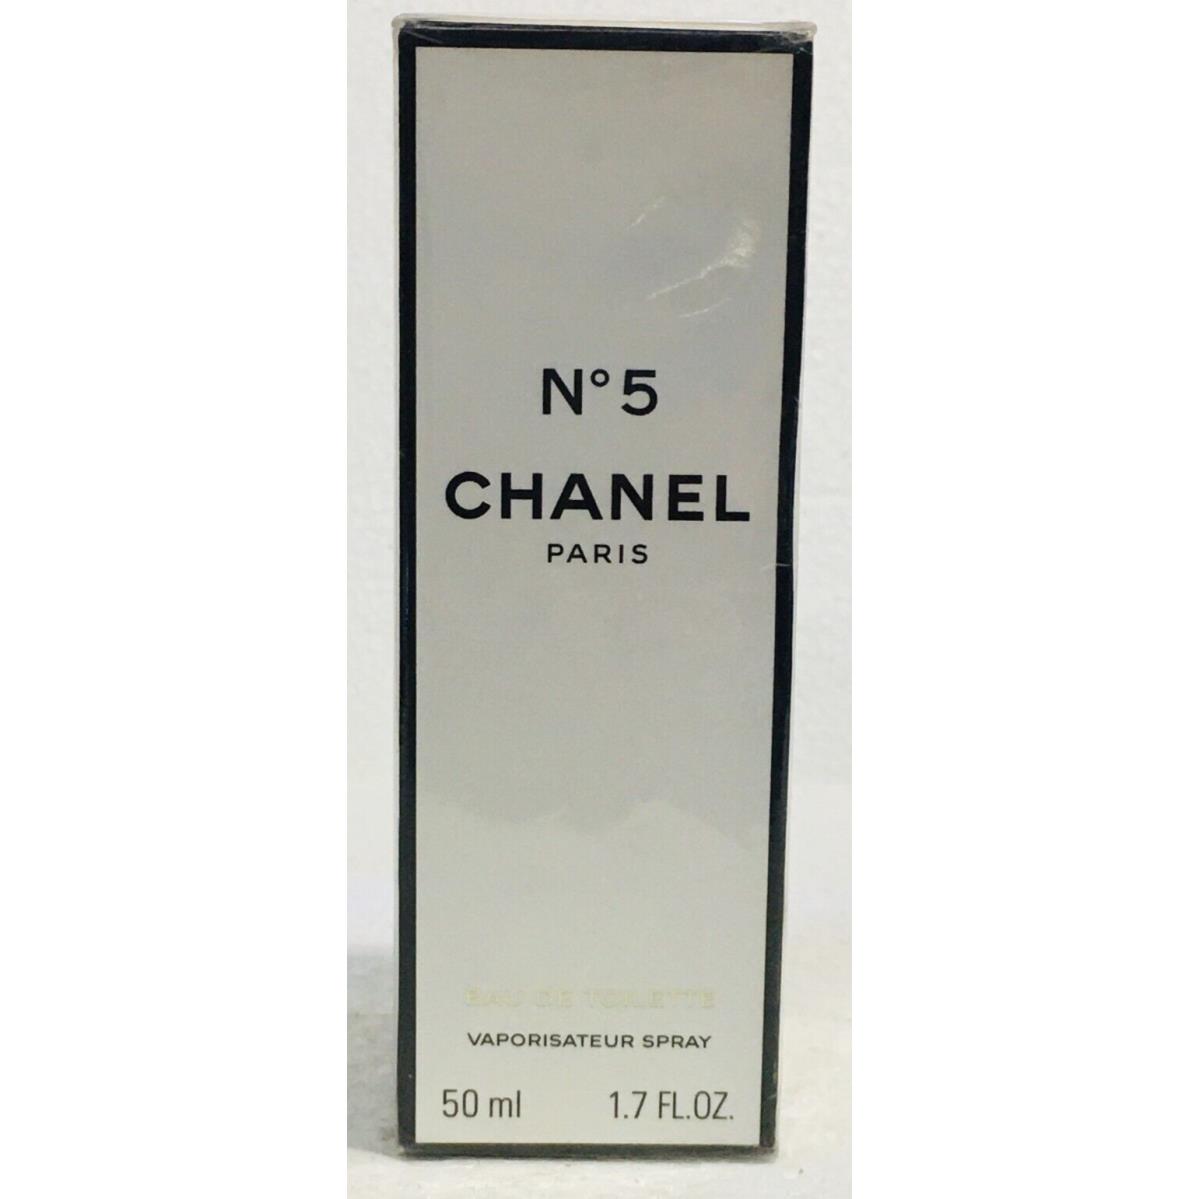 Chanel No 5 Chanel For Women Eau de Toilette 50ml